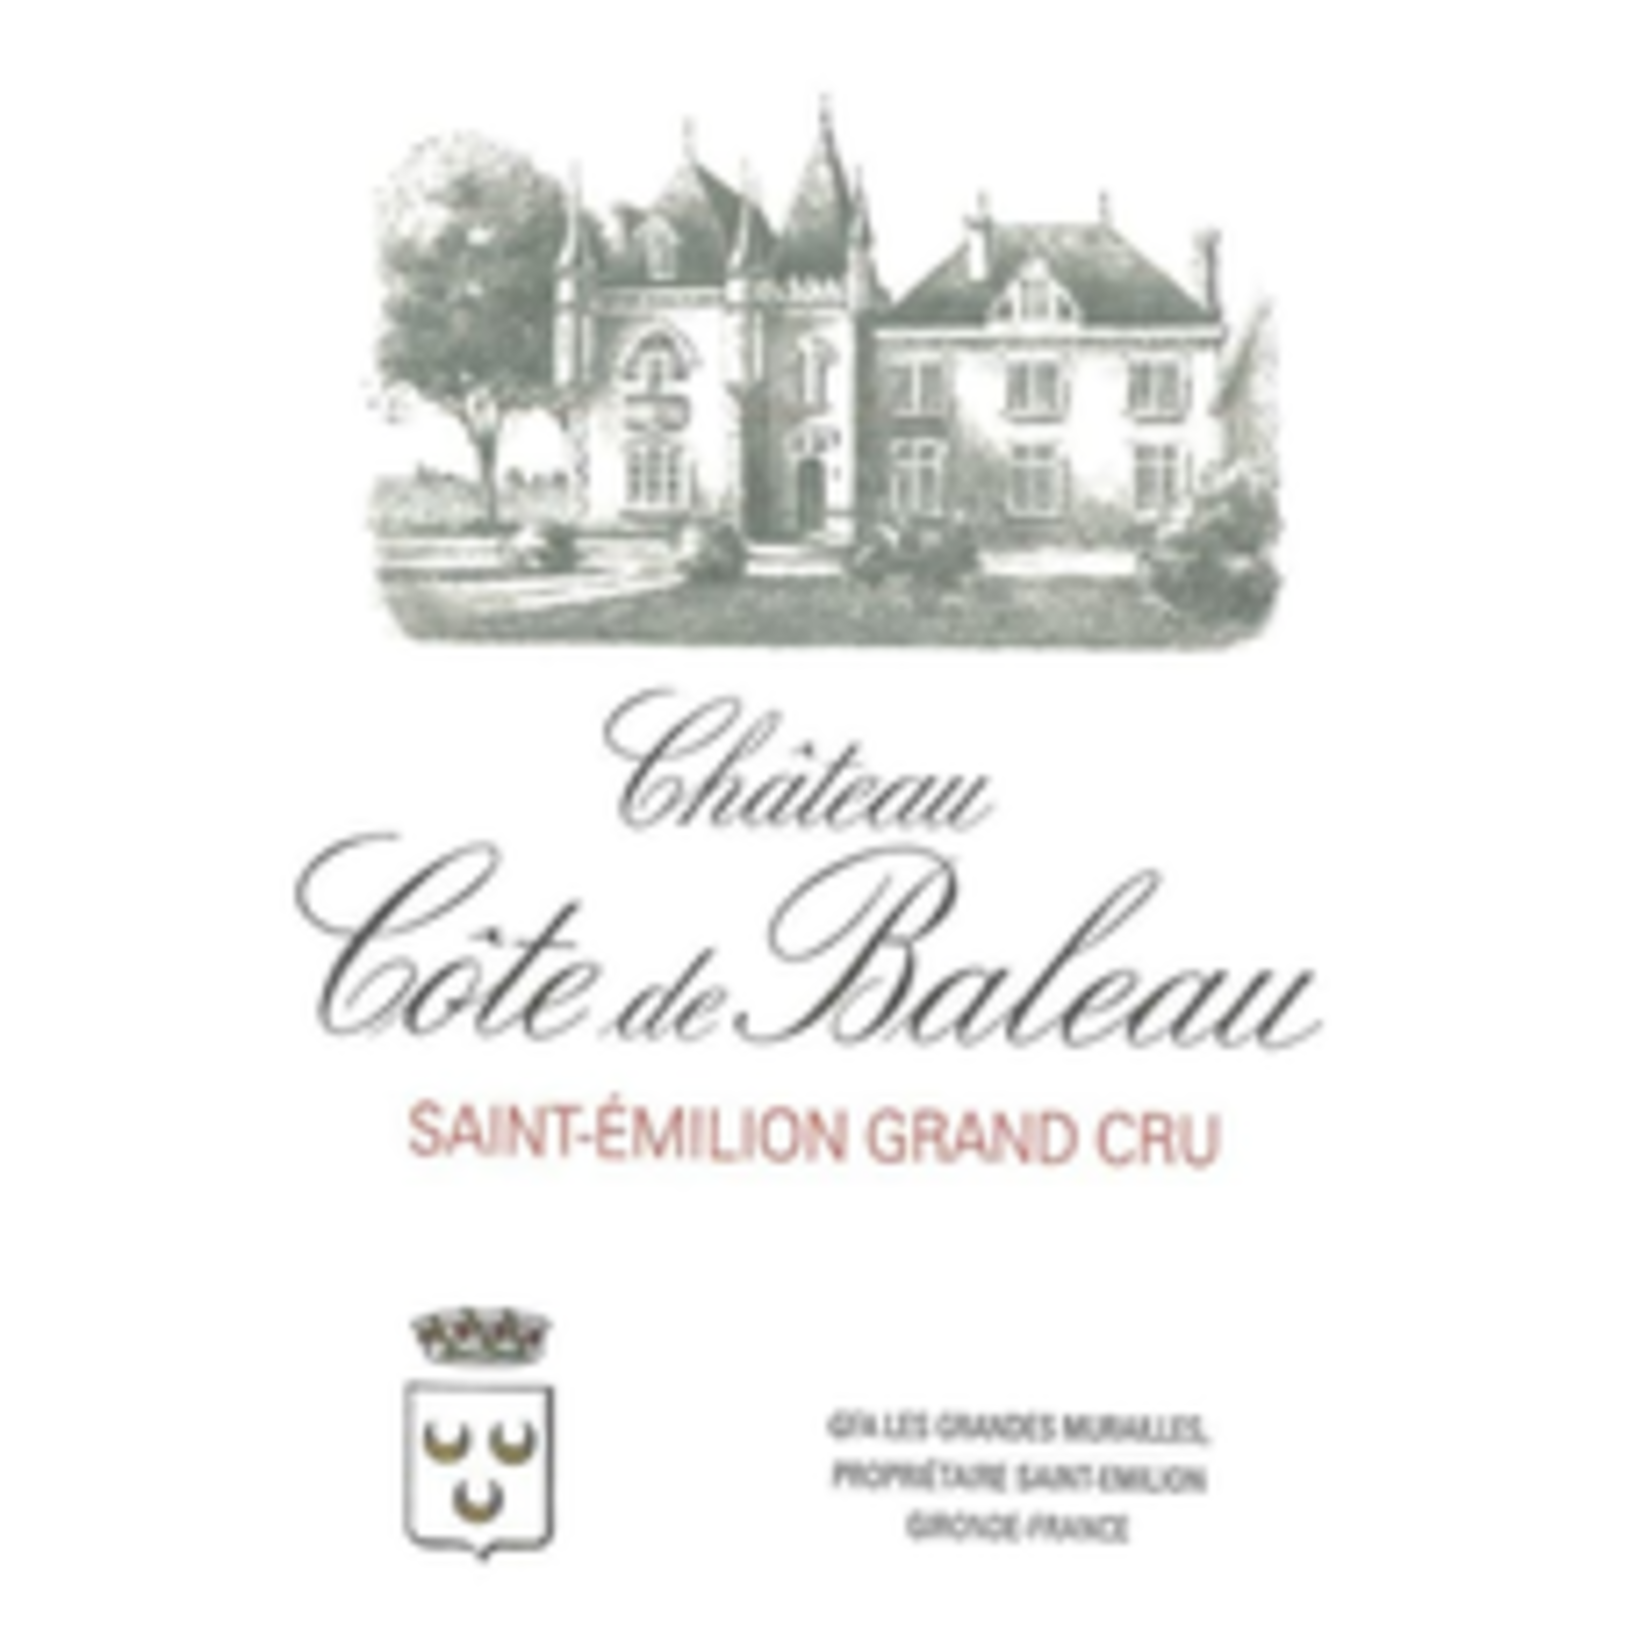 Wine Chateau Cote de Baleau 2018